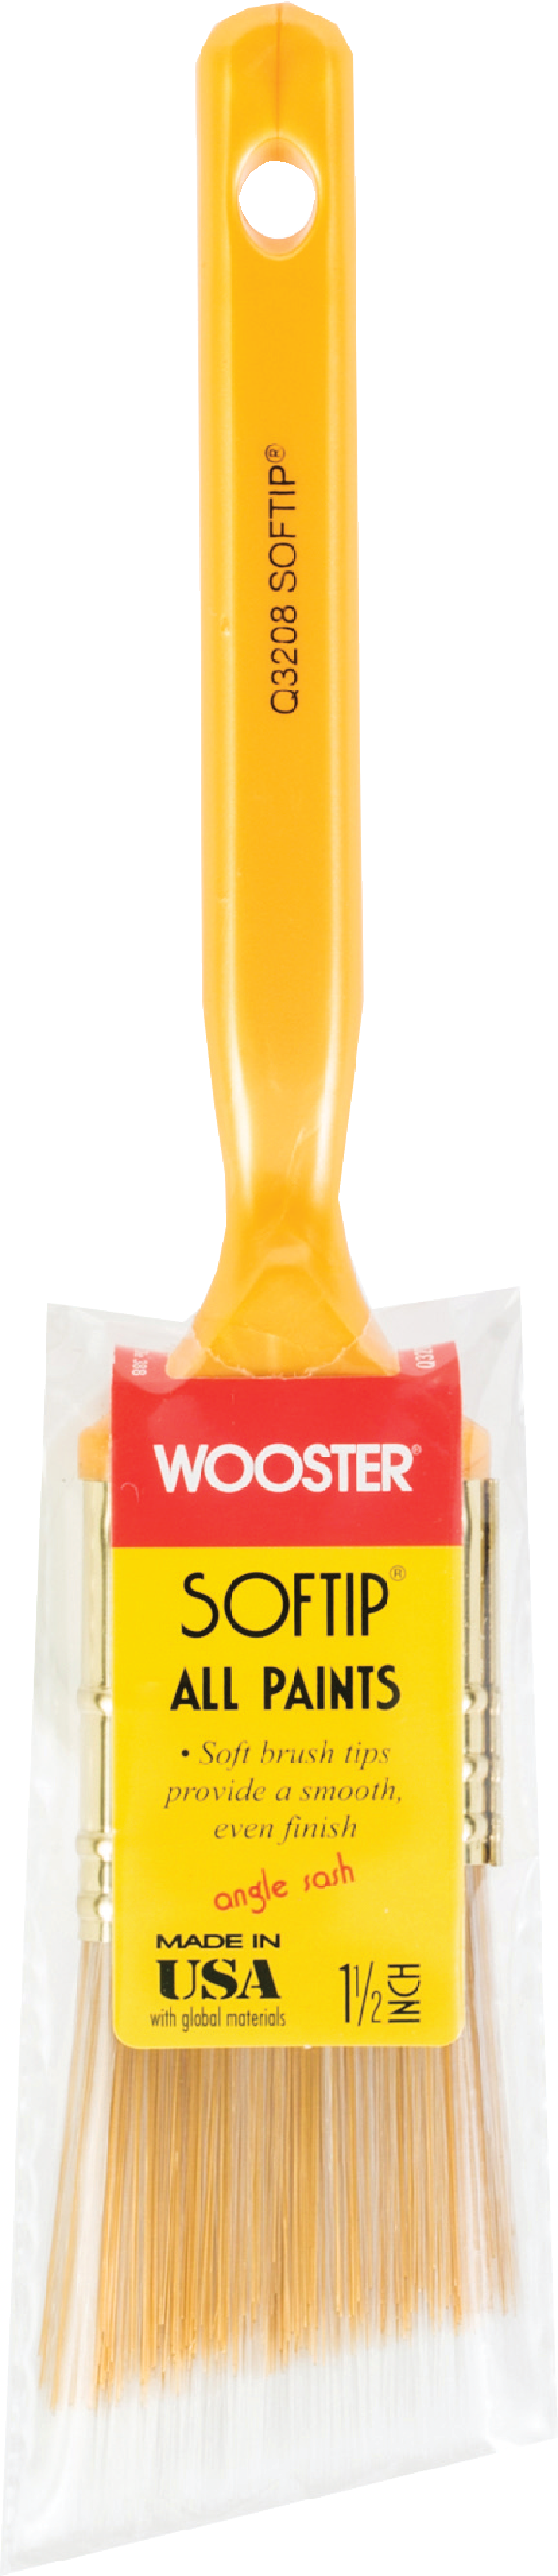 Wooster Softip 1-1/2 Angle Sash Paint Brush